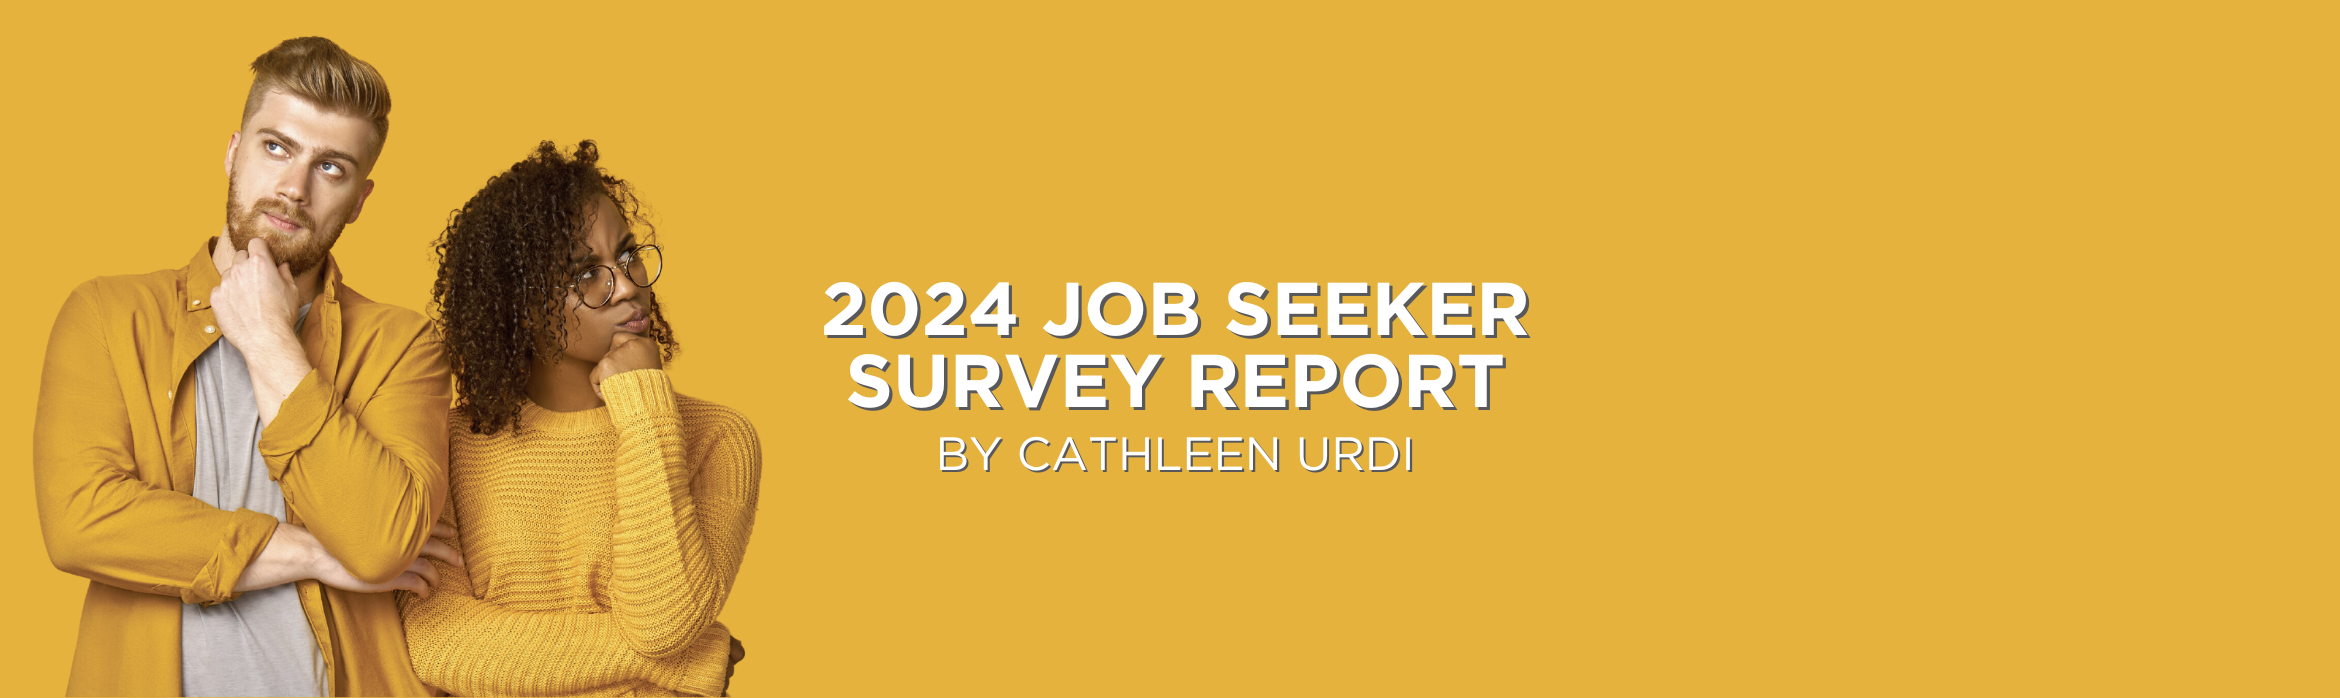 2024 Job Seeker Survey Report